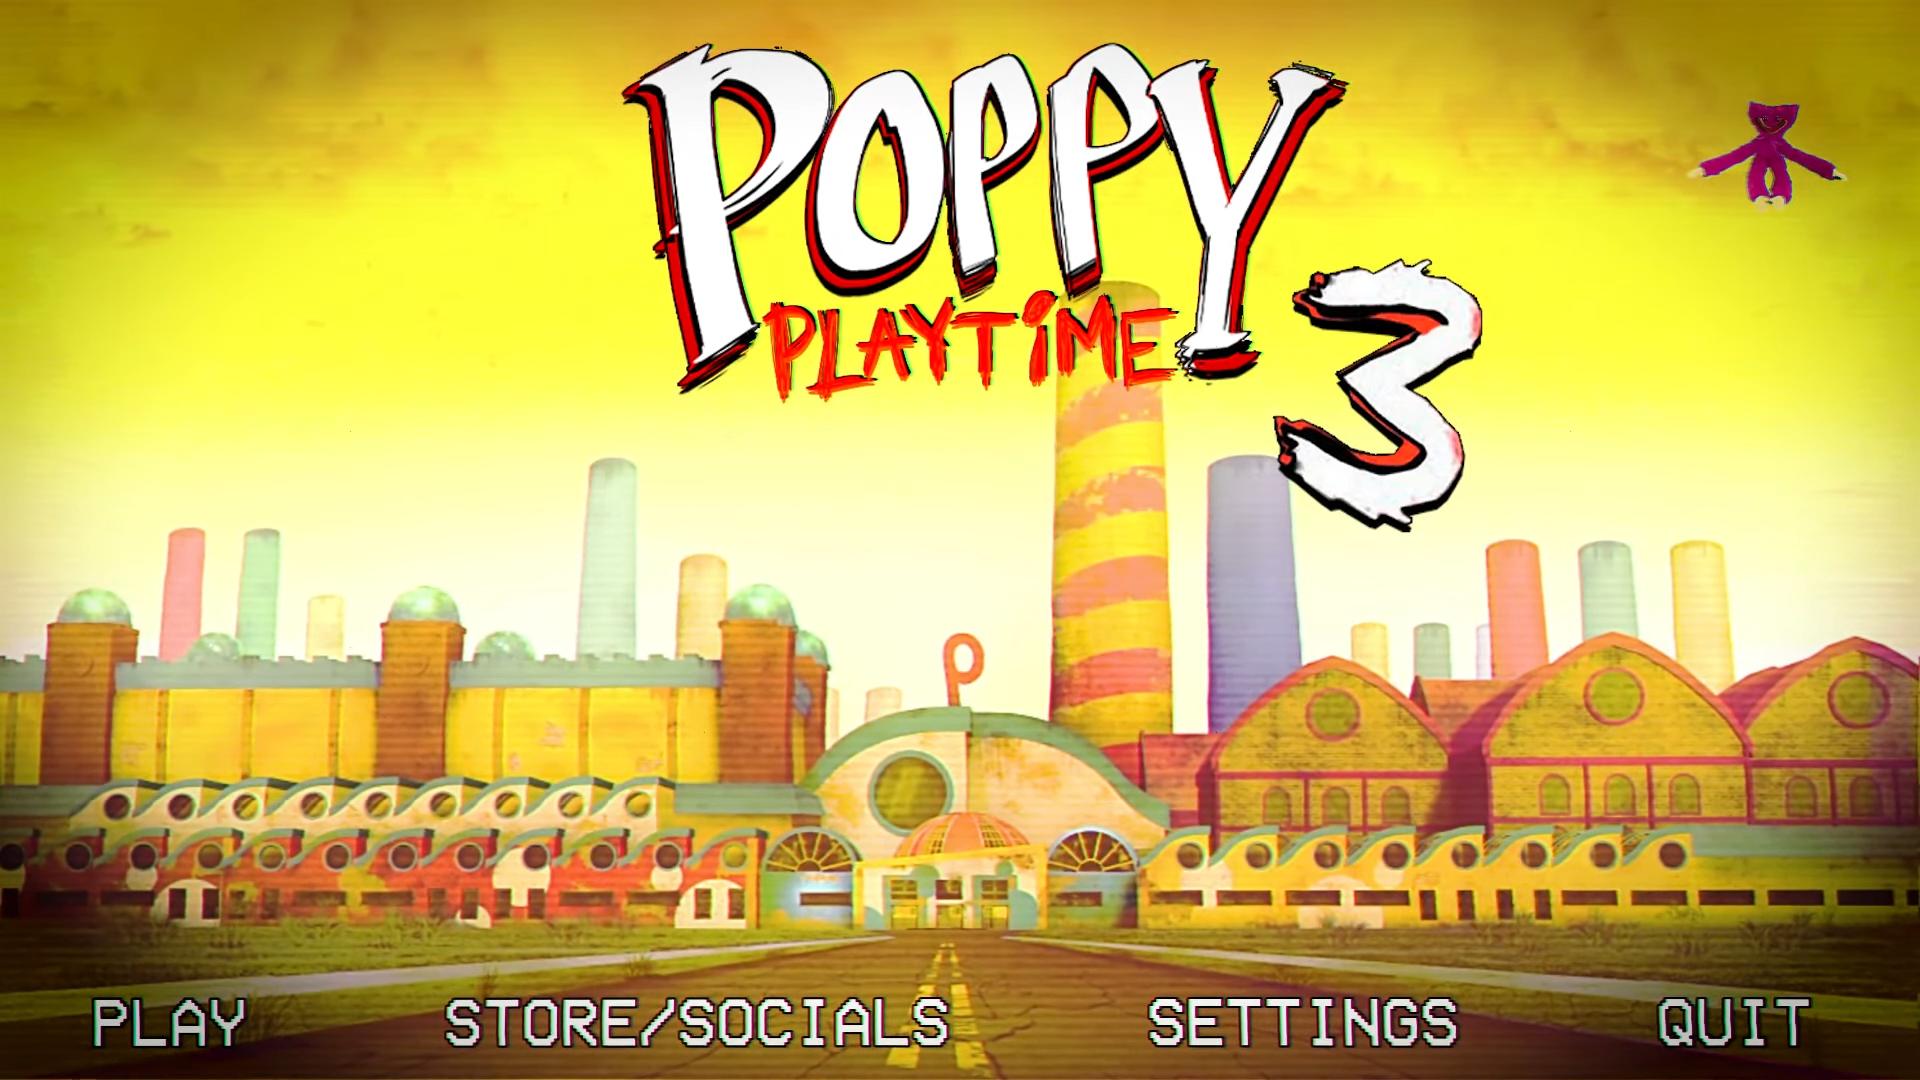 Как выглядит игра poppy playtime 3. Poppy Playtime игра. Завод Poppy Play time. Фабрика из игры Poppy Playtime. Poppy Playtime главное меню.